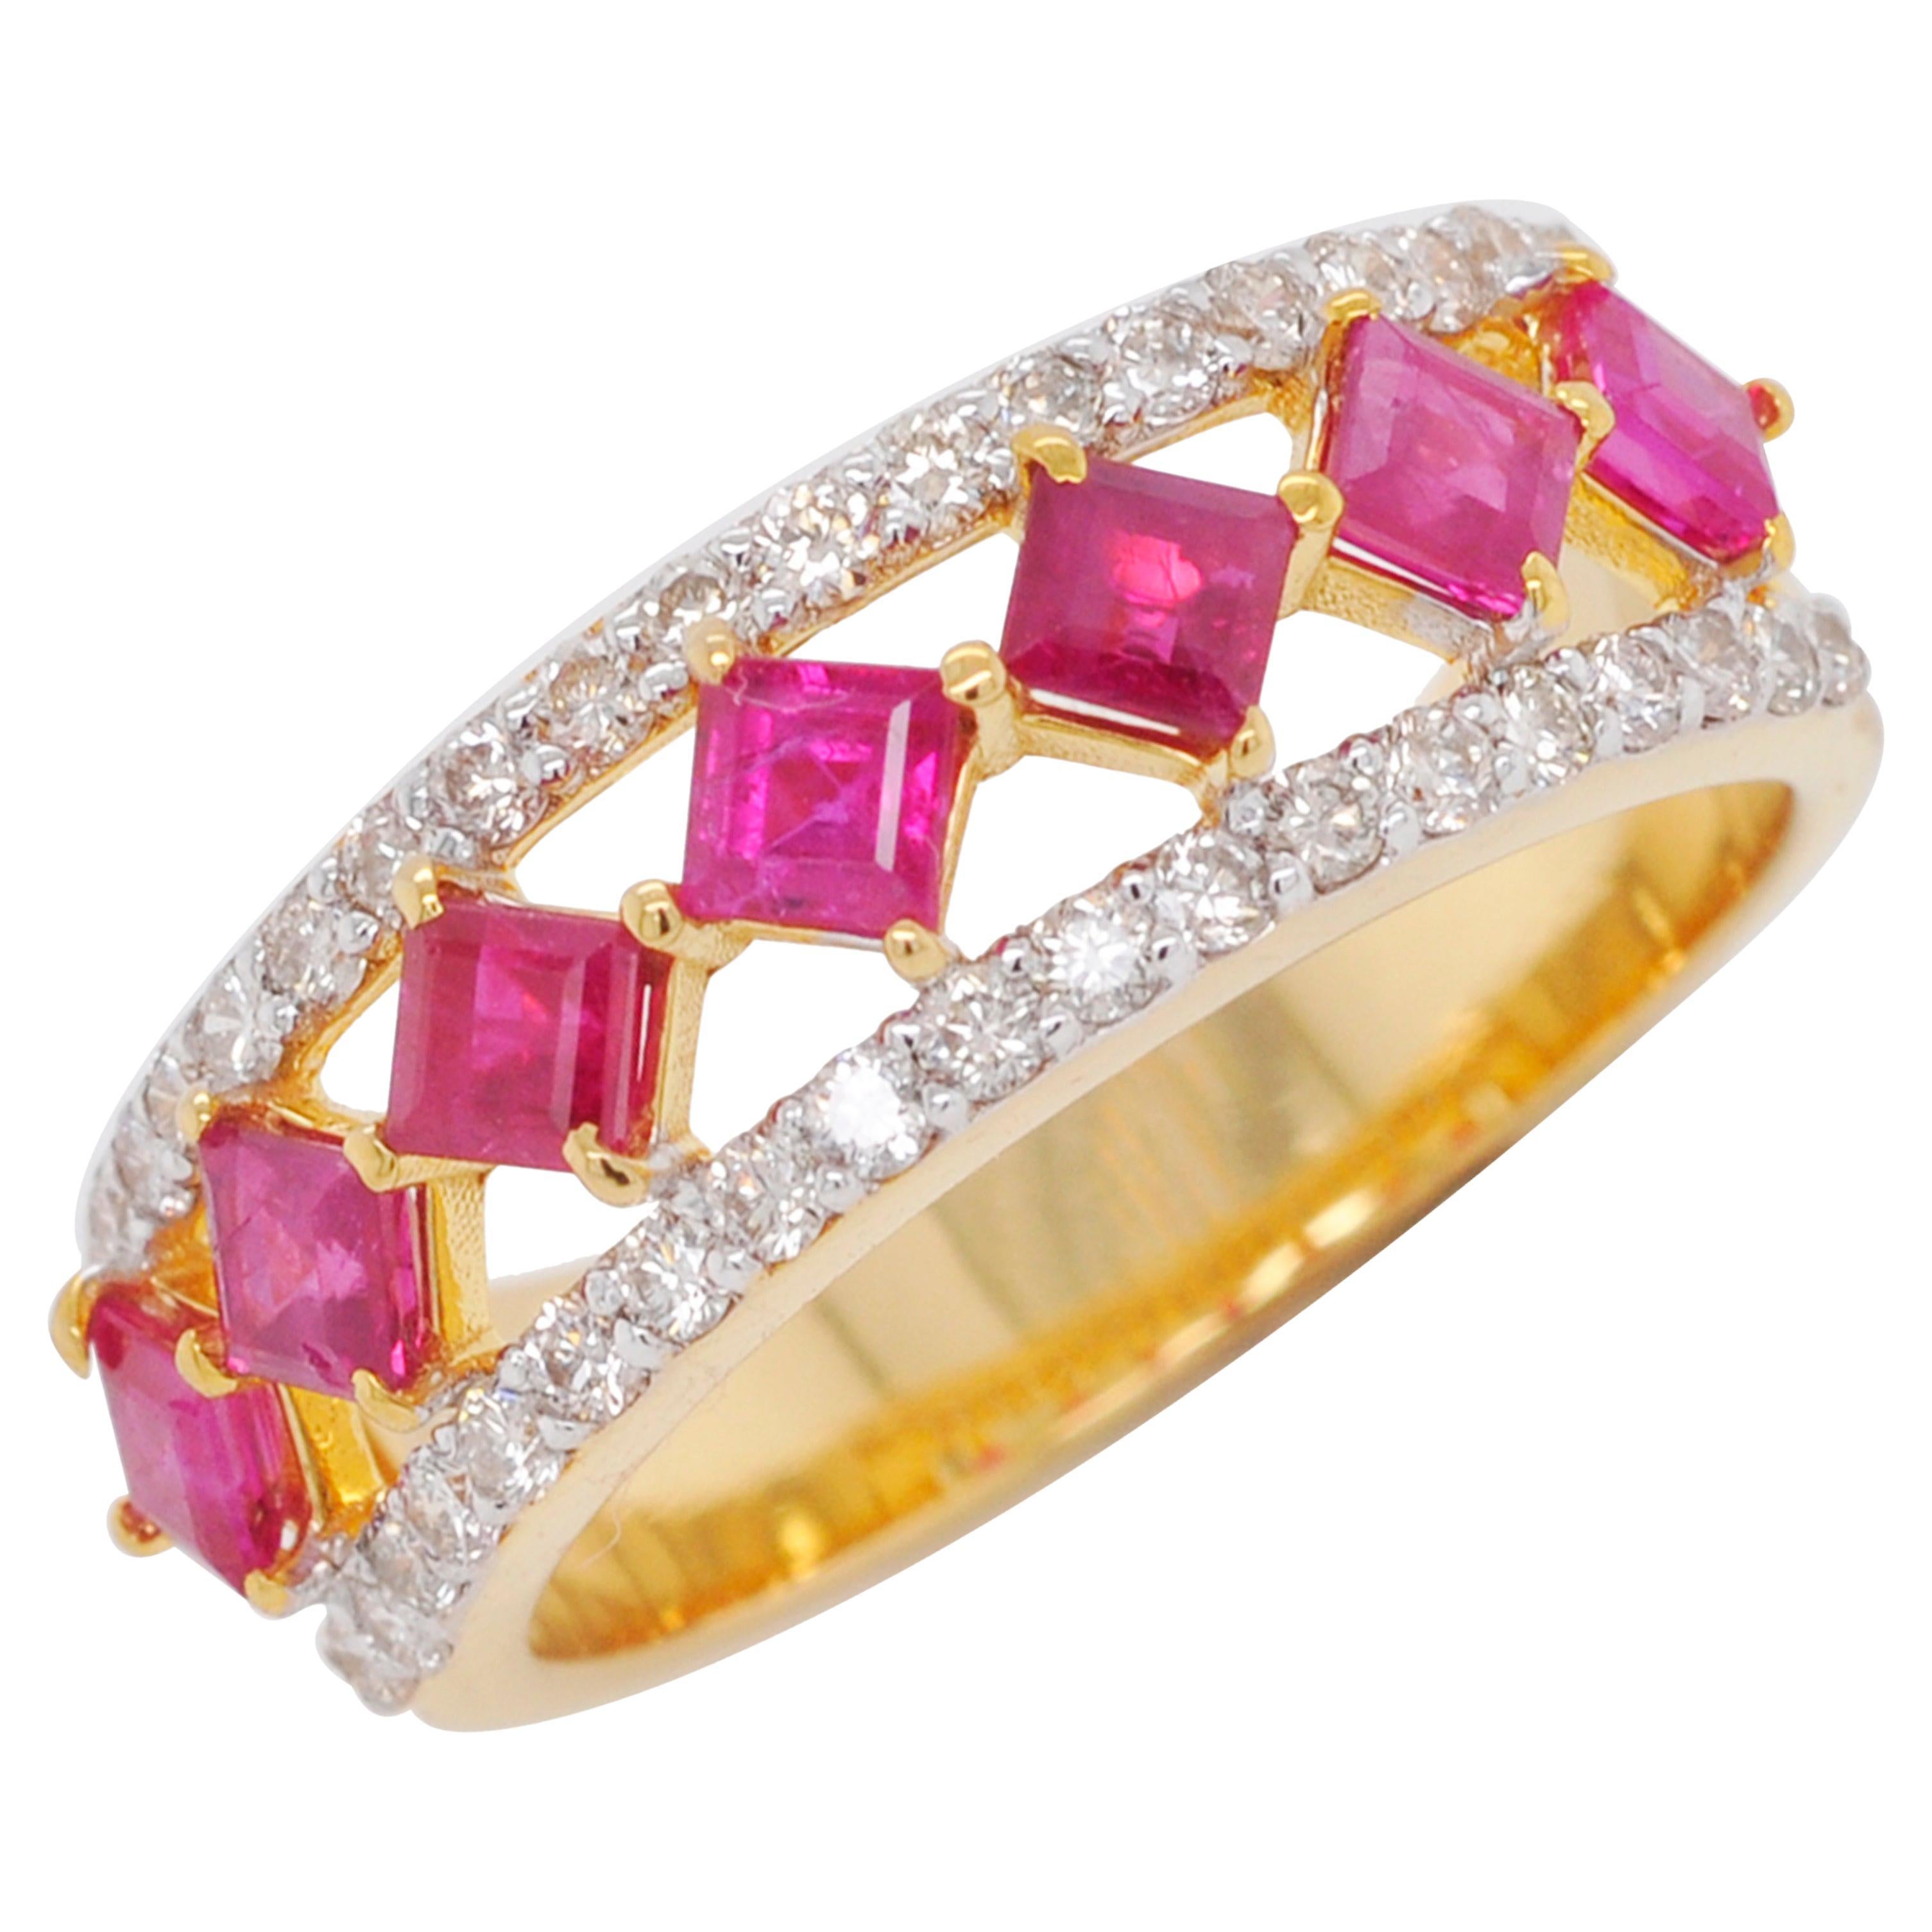 For Sale:  18 Karat Yellow Gold Princess Cut Ruby Diamond Band Ring